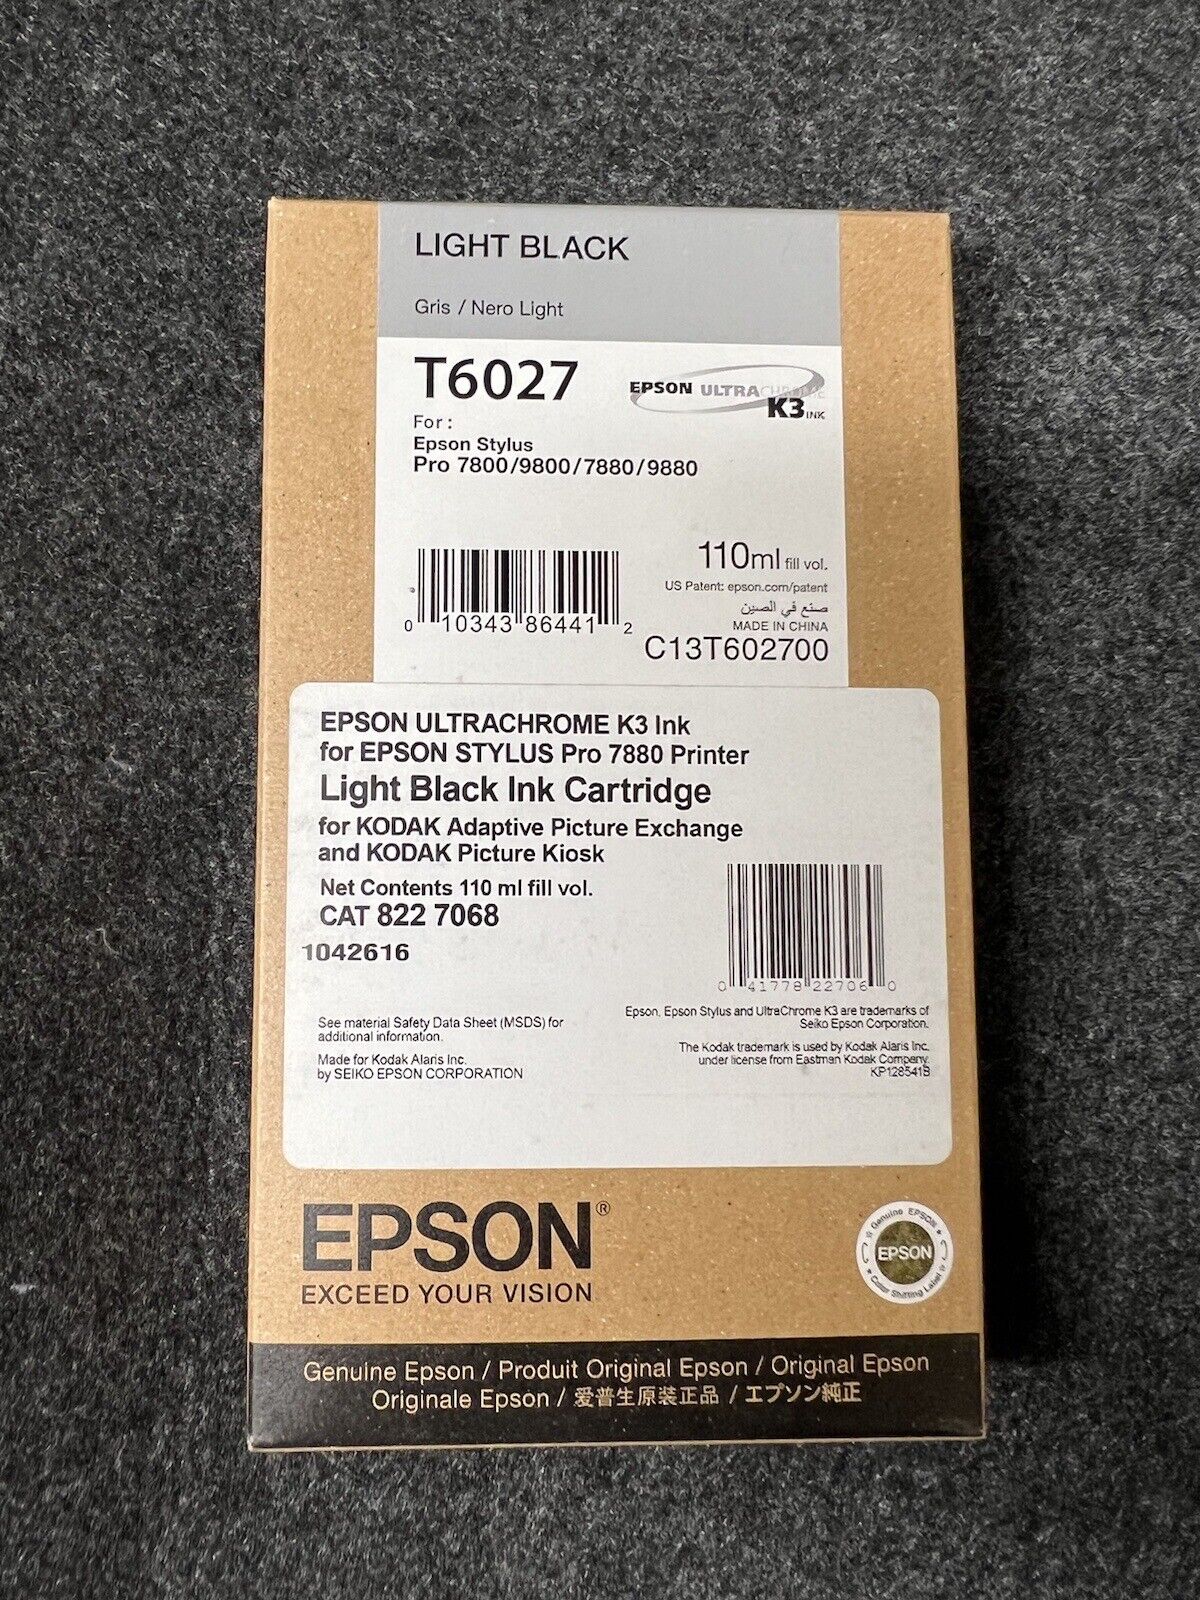 NEW Genuine EPSON T6027 Light Black 110ml Ink Stylus Pro - EXP 11/2020